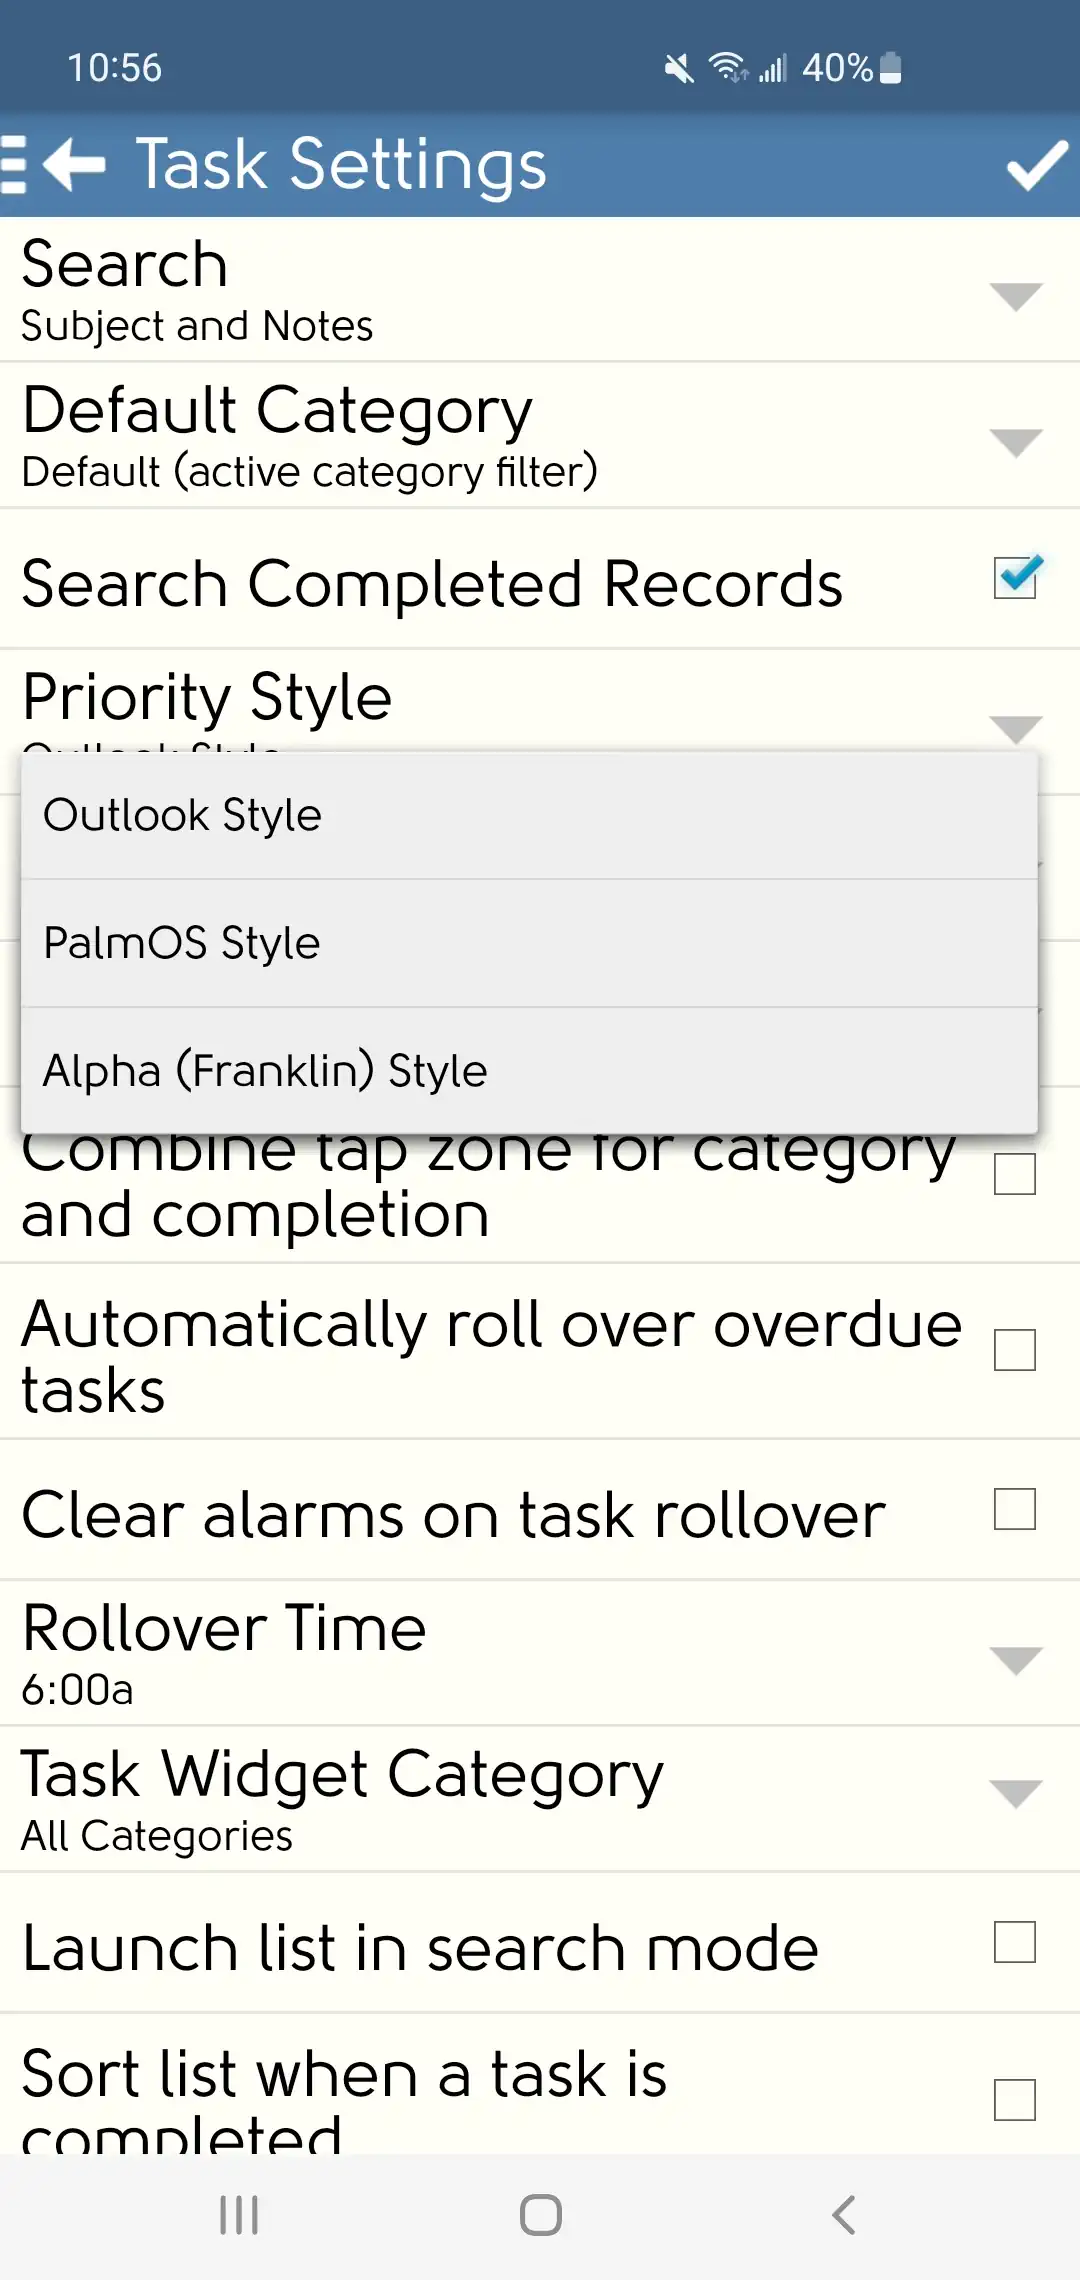 DejaOffice Task Priority Styles